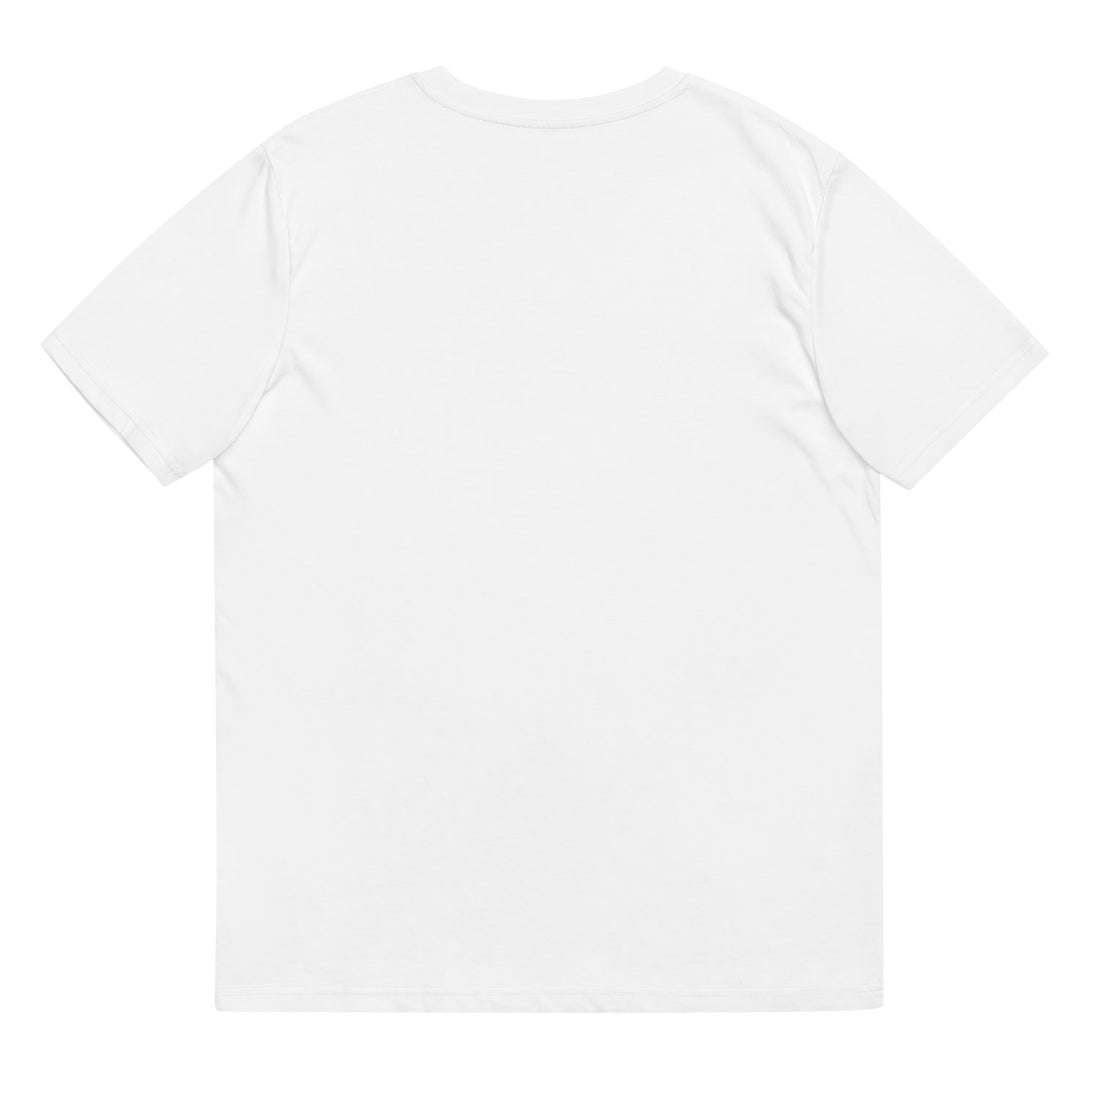 bayc mayc ape apecoin logo tshirt white